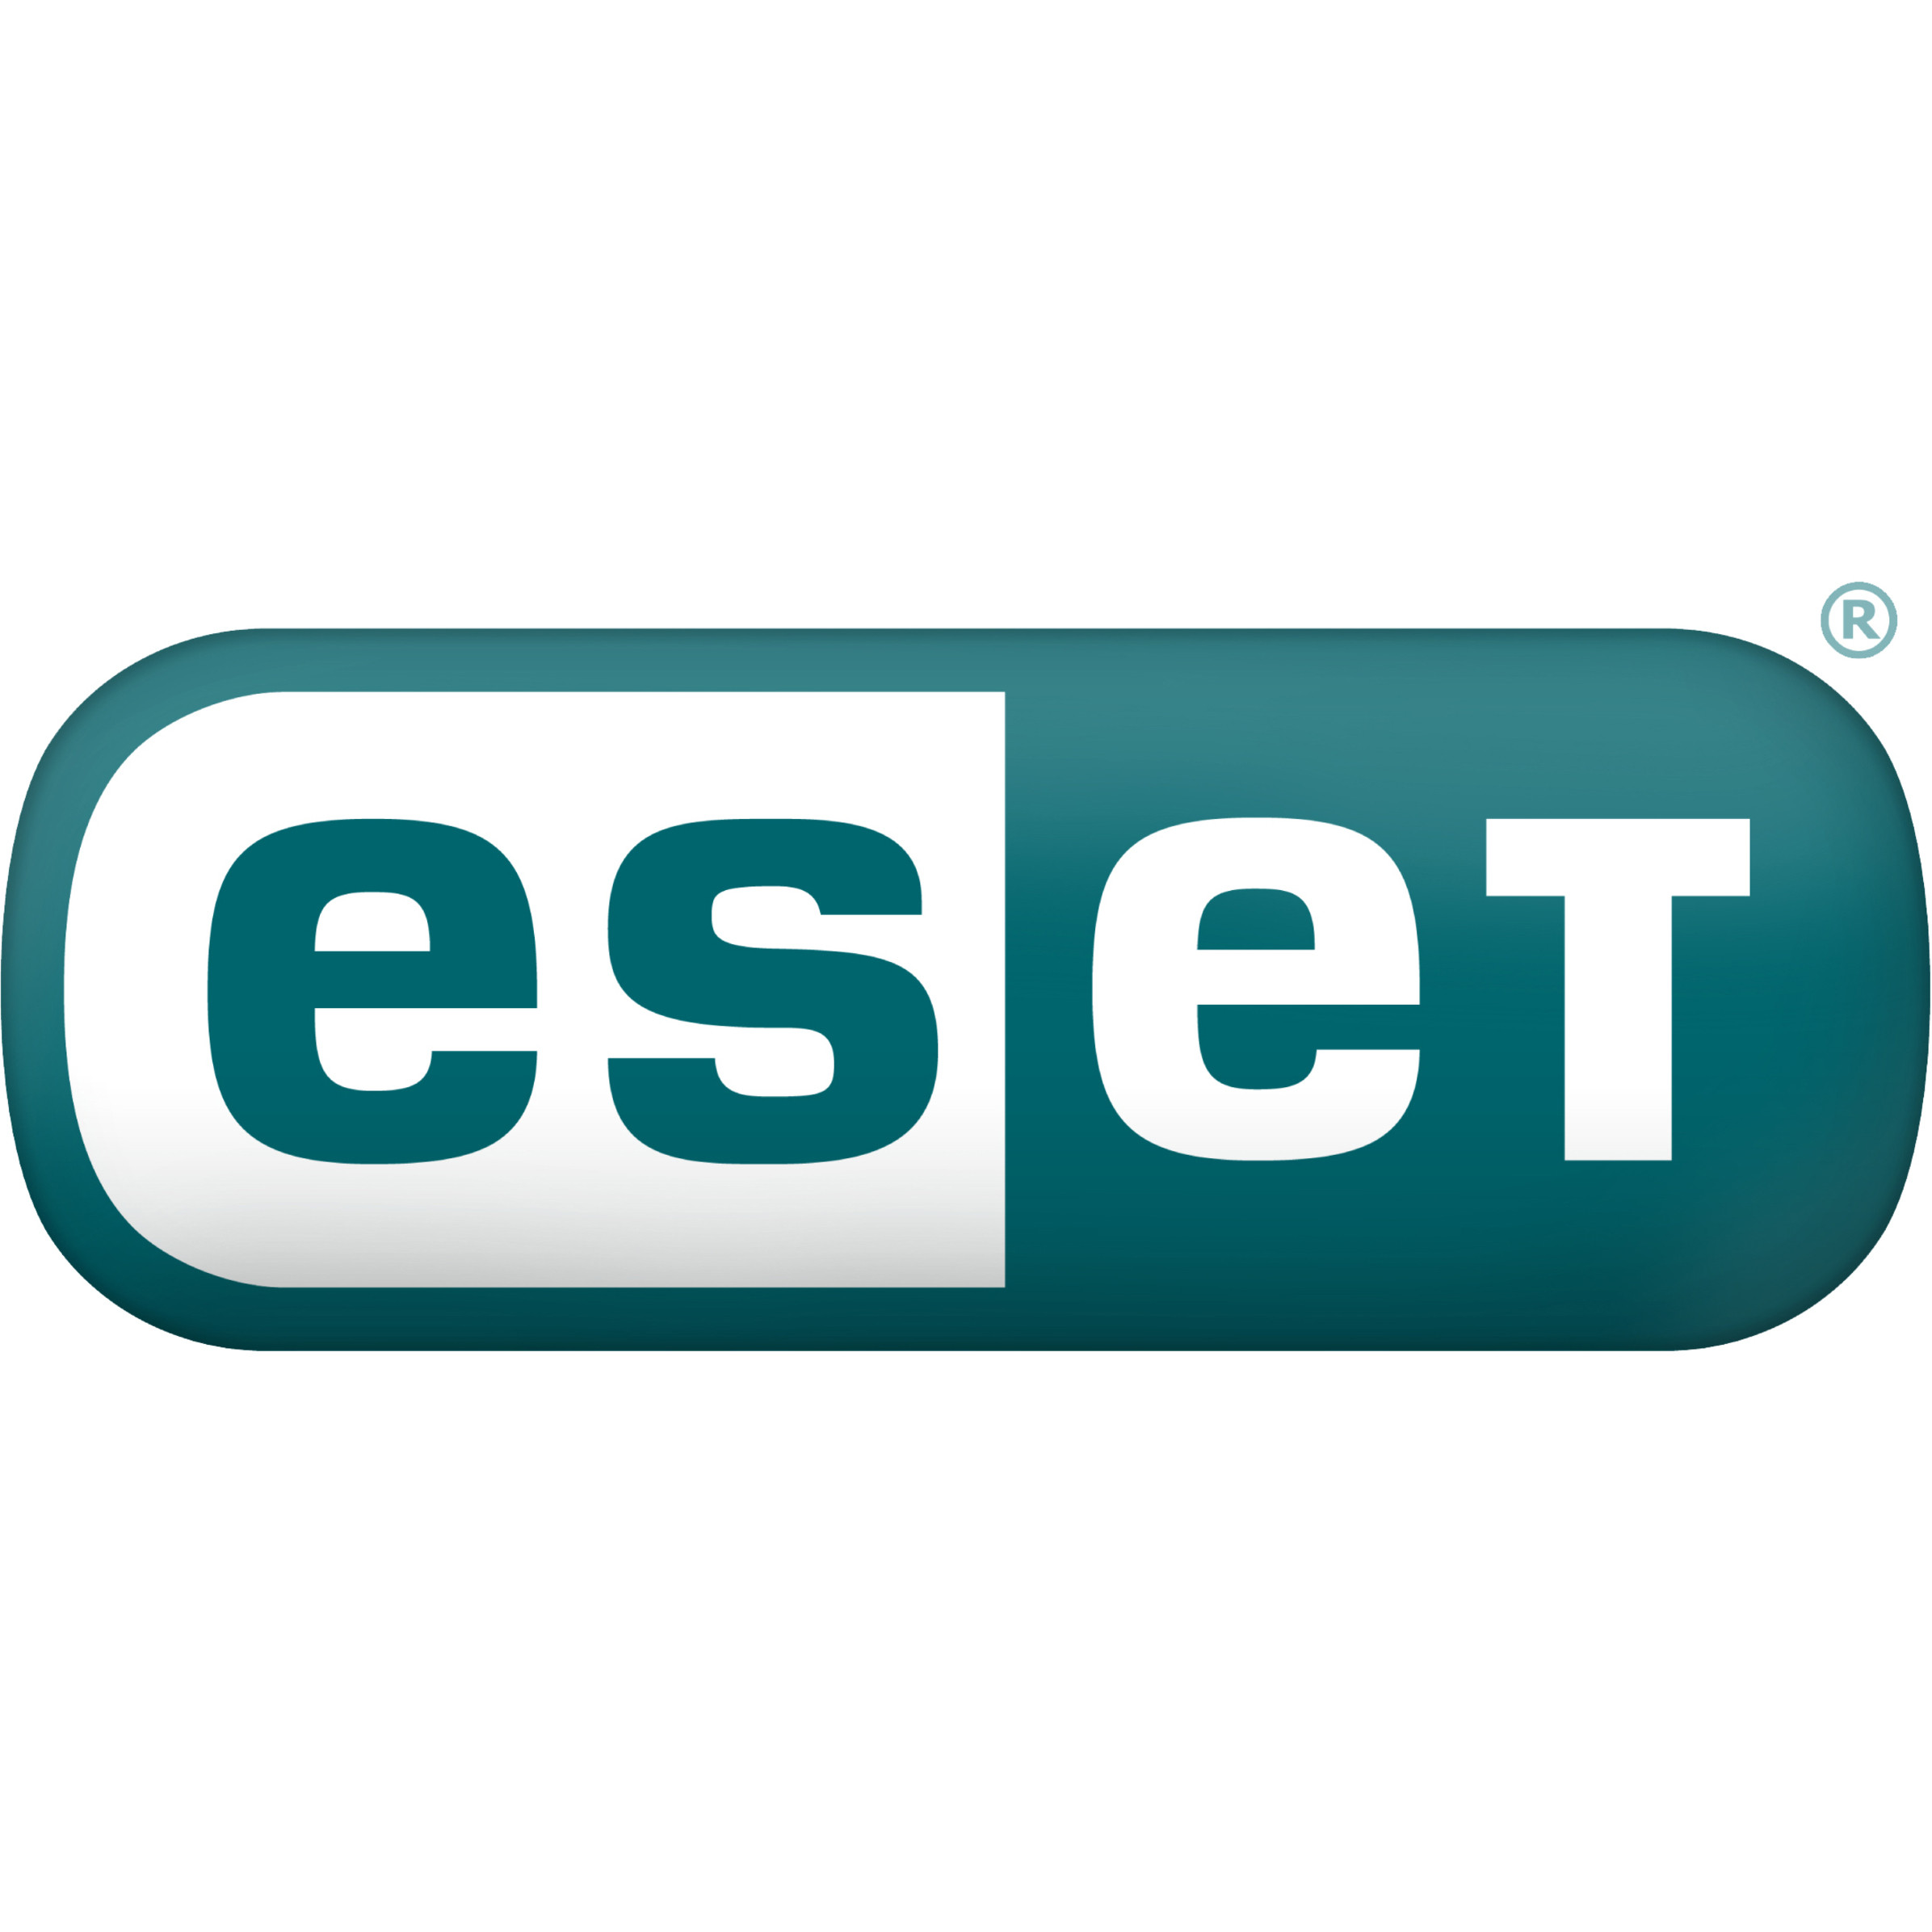 ESET Endpoint Encryption Professional EditionSubscription License1 DevicePrice Level B1VolumePC, Handheld